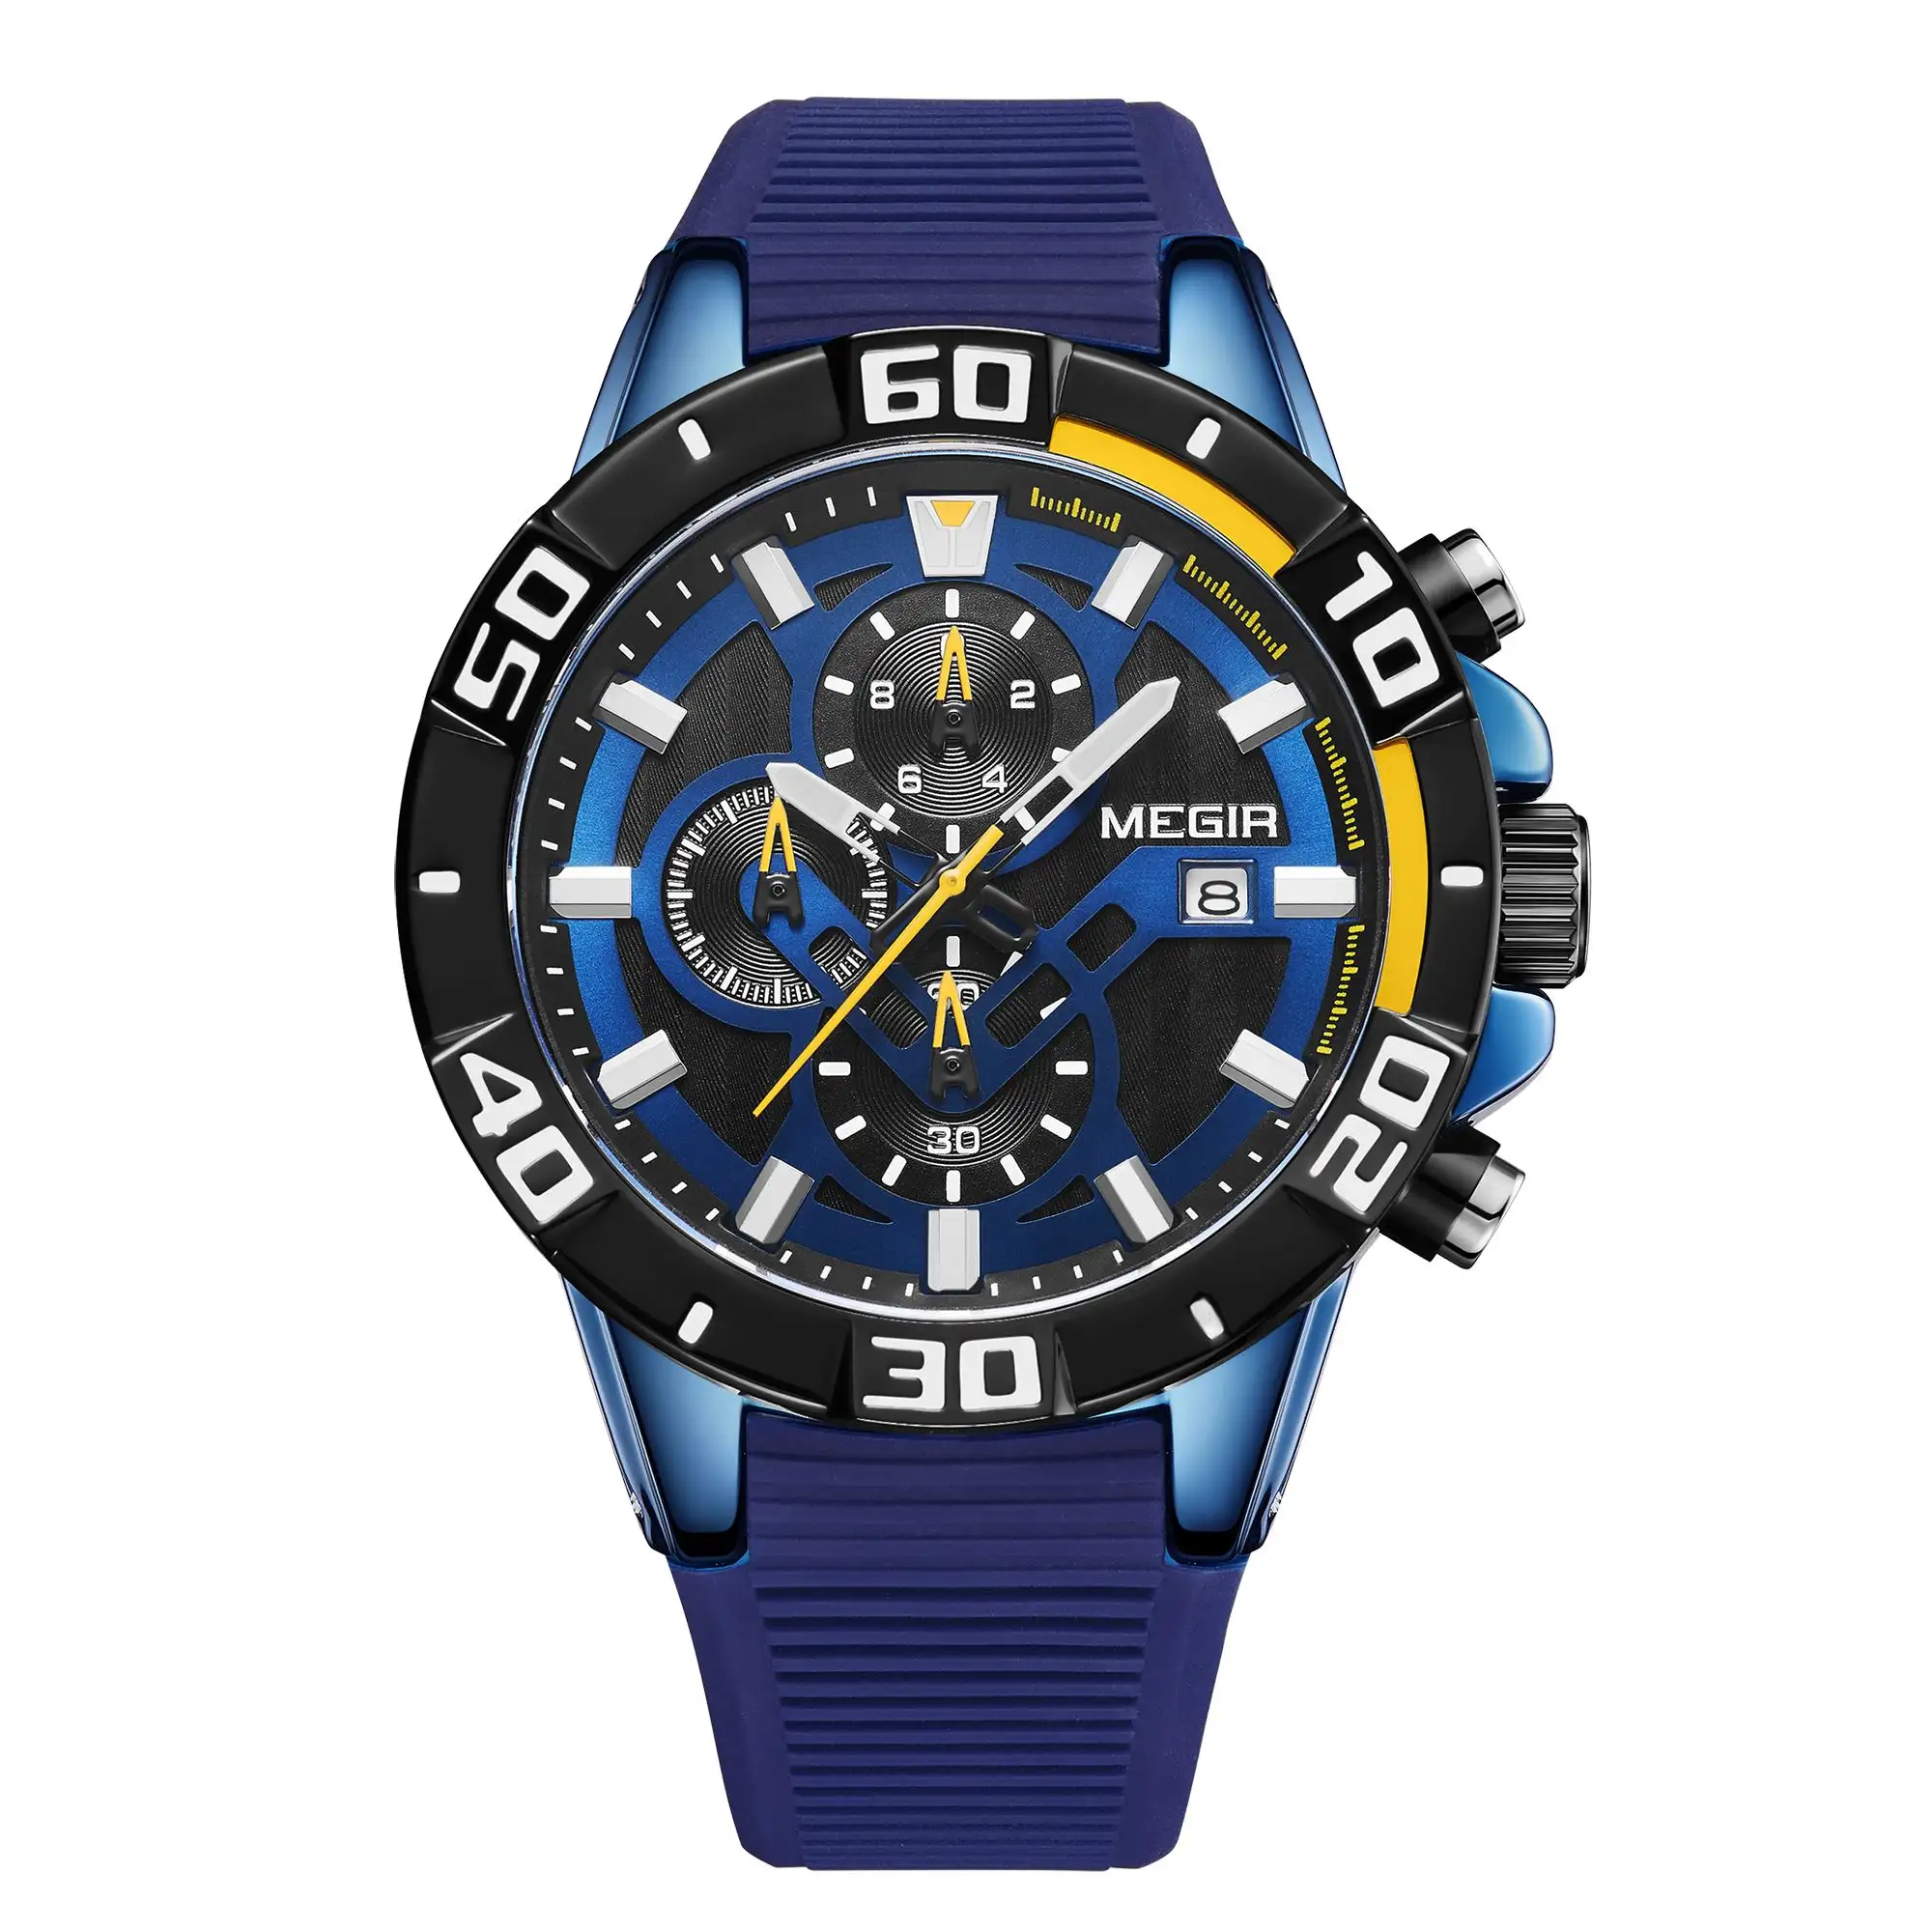 MEGIR 2121 luxury guangzhou man watch stylish Genuine Leather band3 dials Chronograph dropshipping sports wrist watch